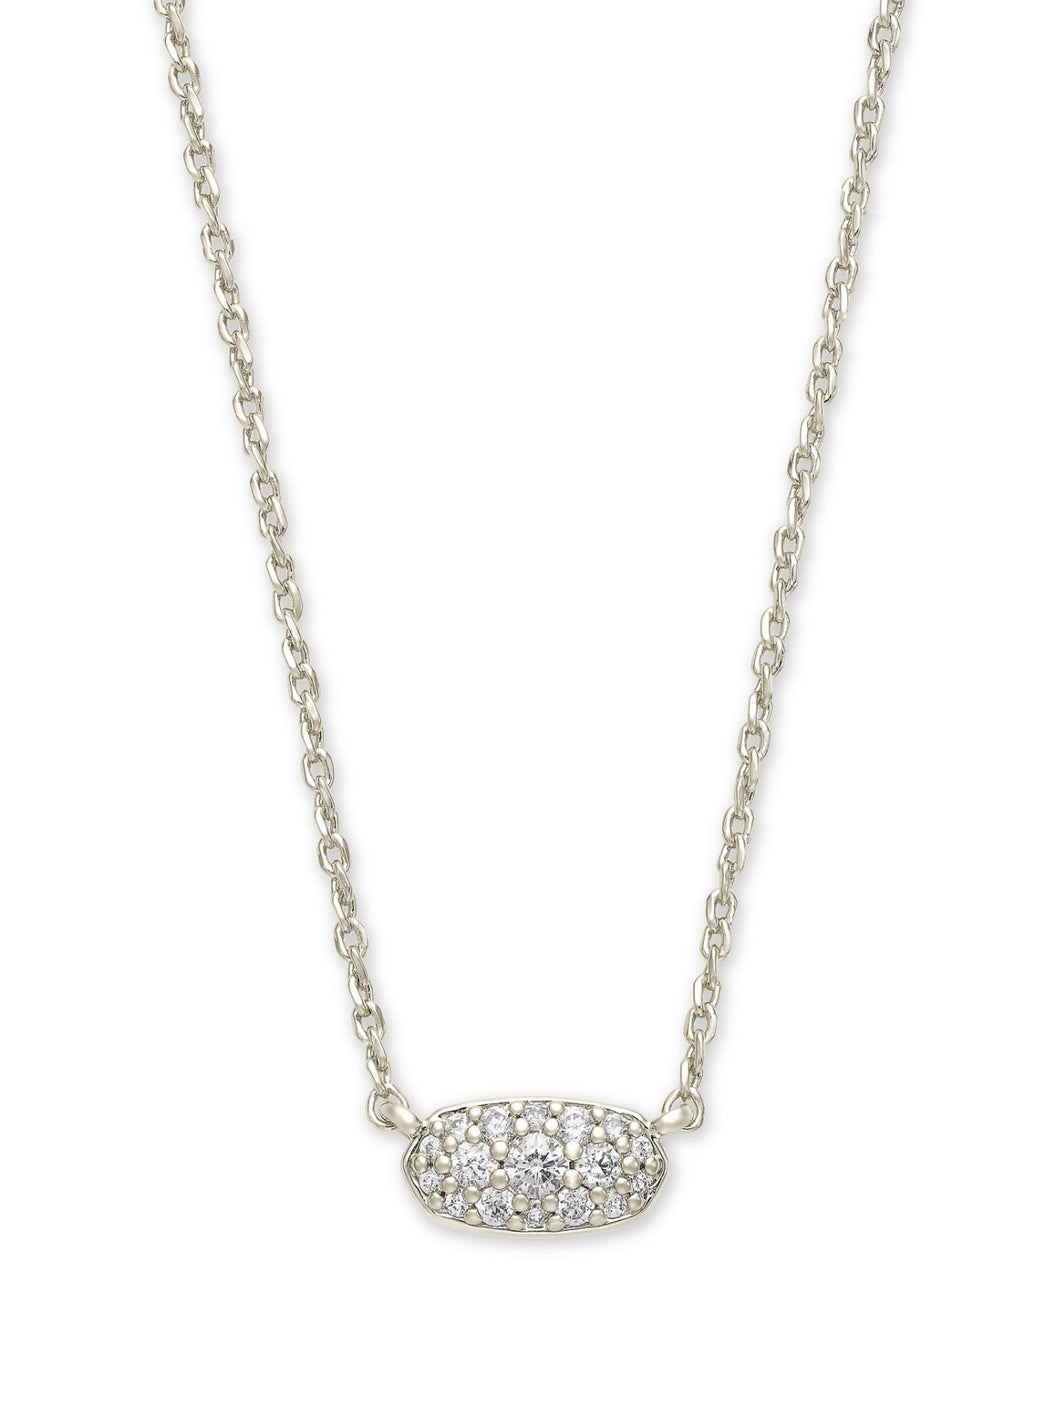 Kendra Scott: Grayson Crystal Pendant Necklace in Silver